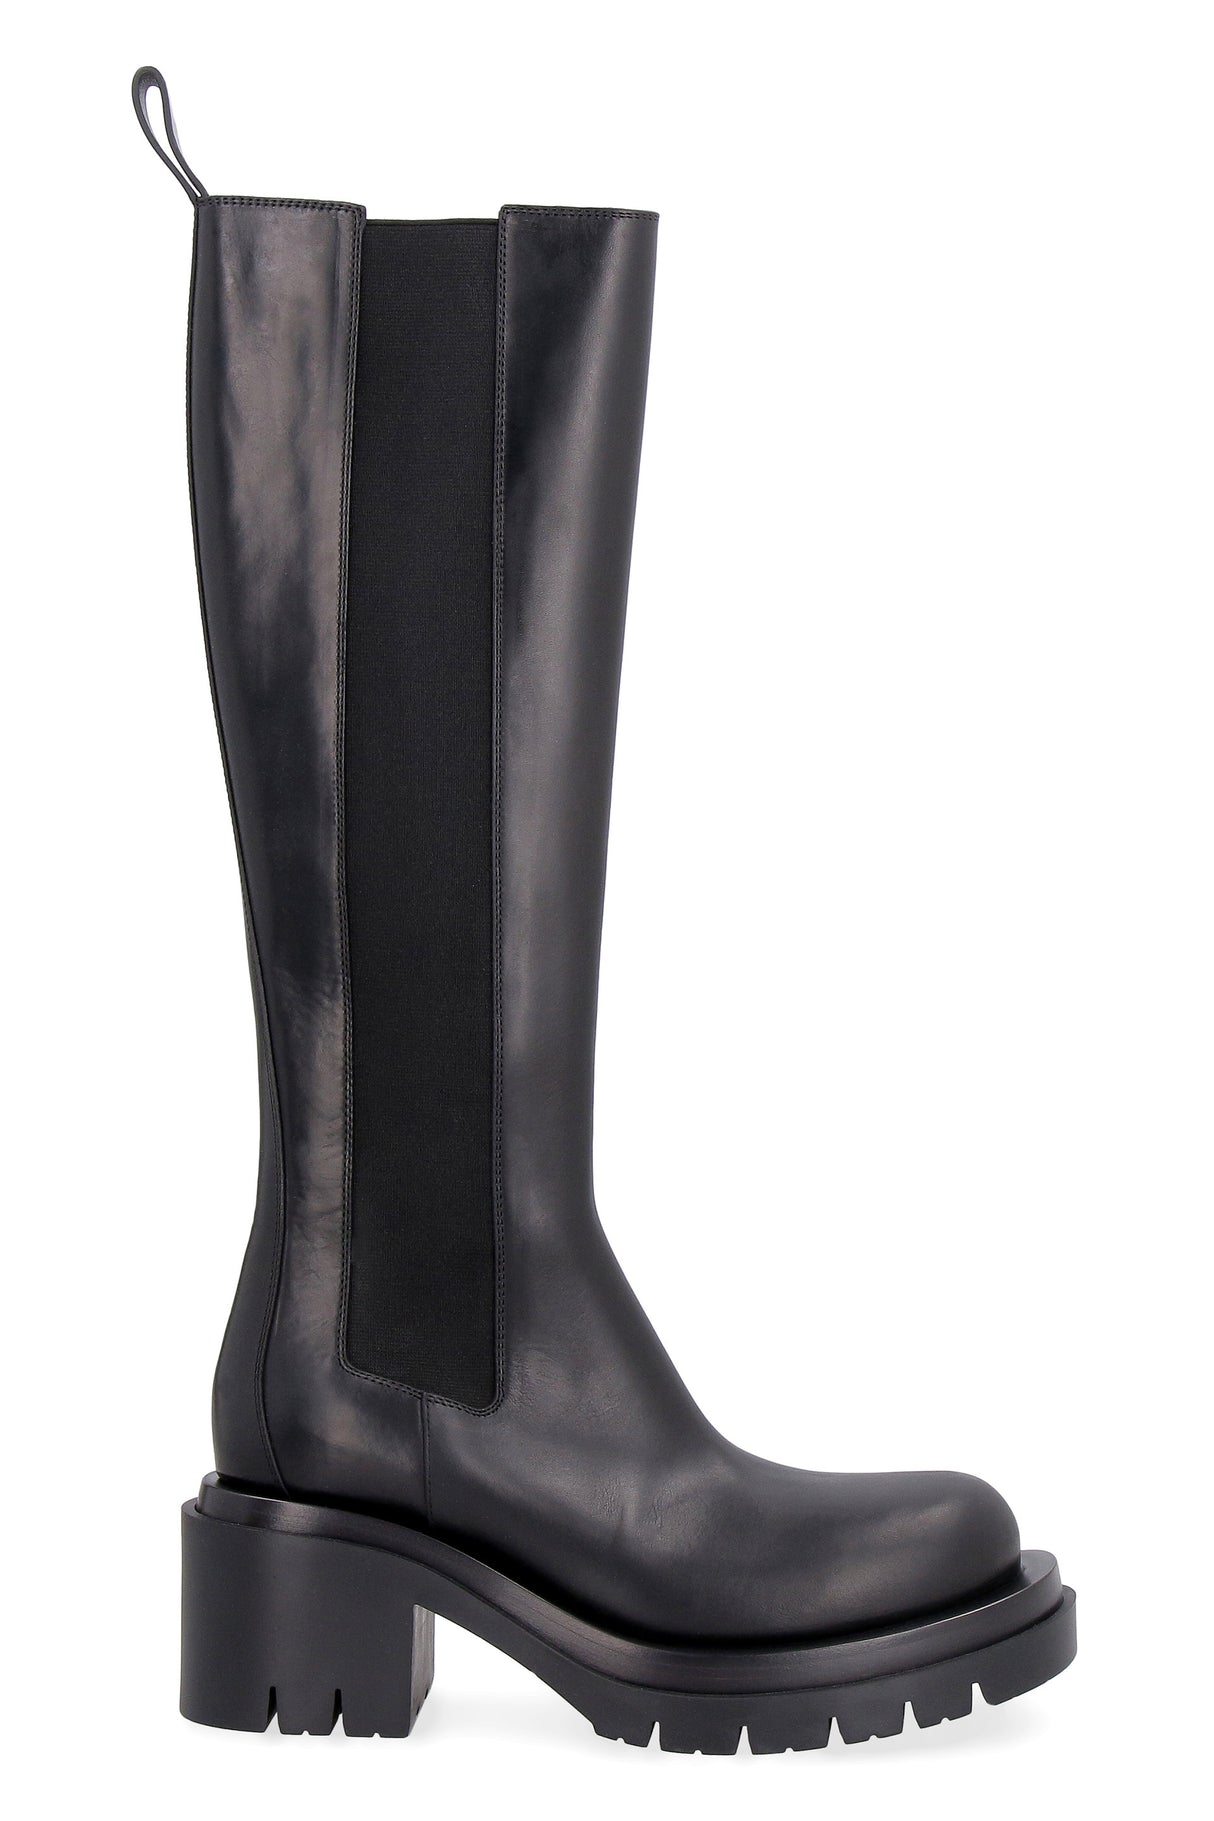 BOTTEGA VENETA Sleek Black Leather Boots for Women - FW22 Collection